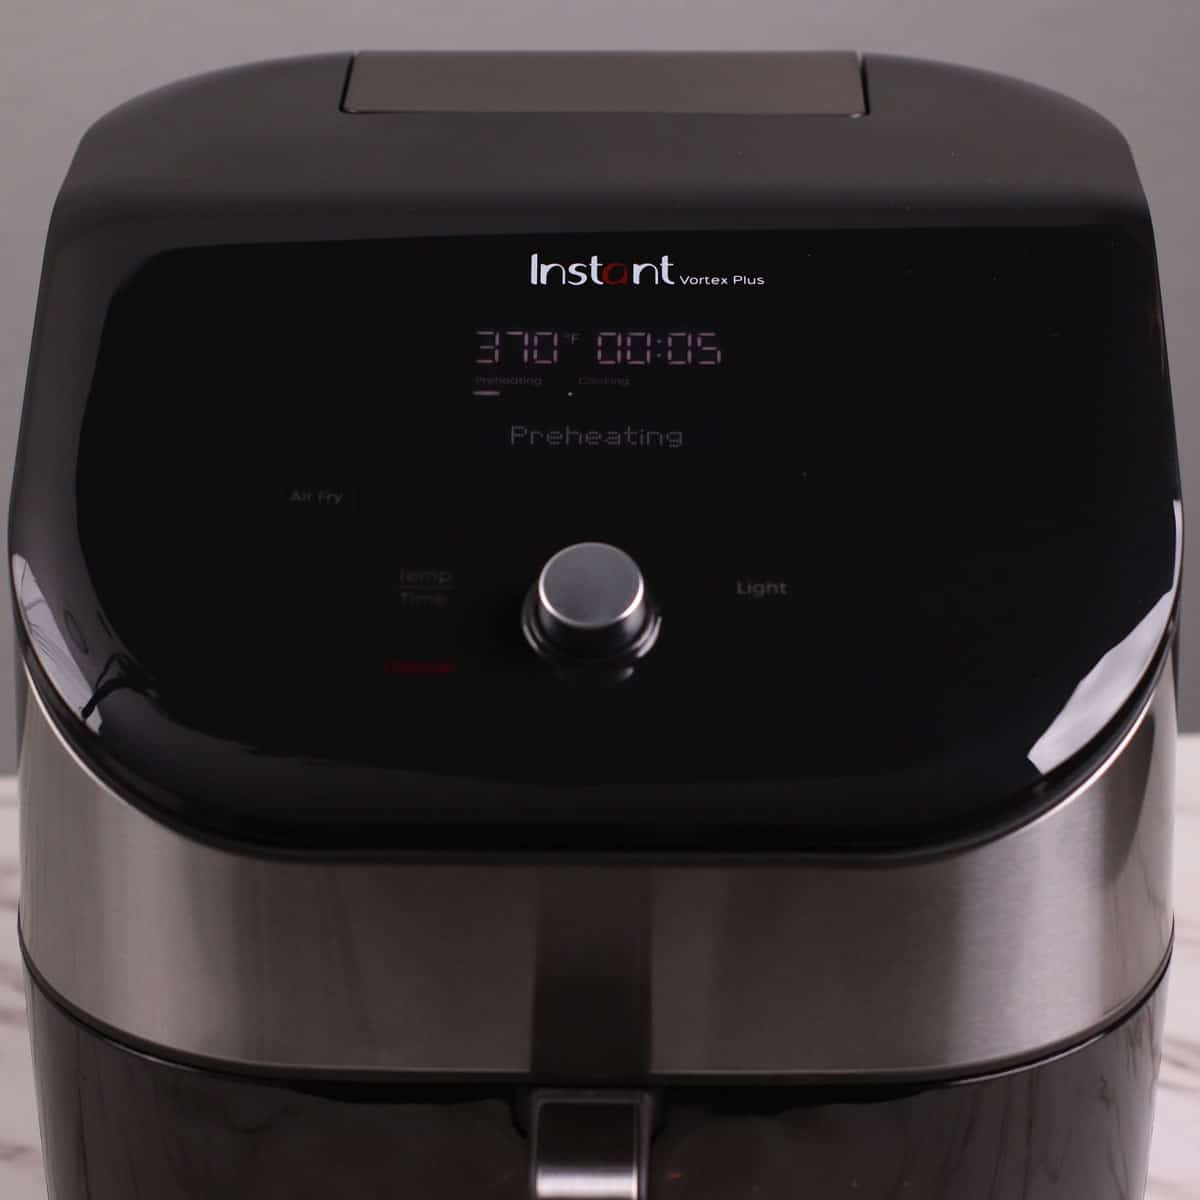 Preating Instant Pot Vortex Plus Air Fryer to 370°F (187°C).